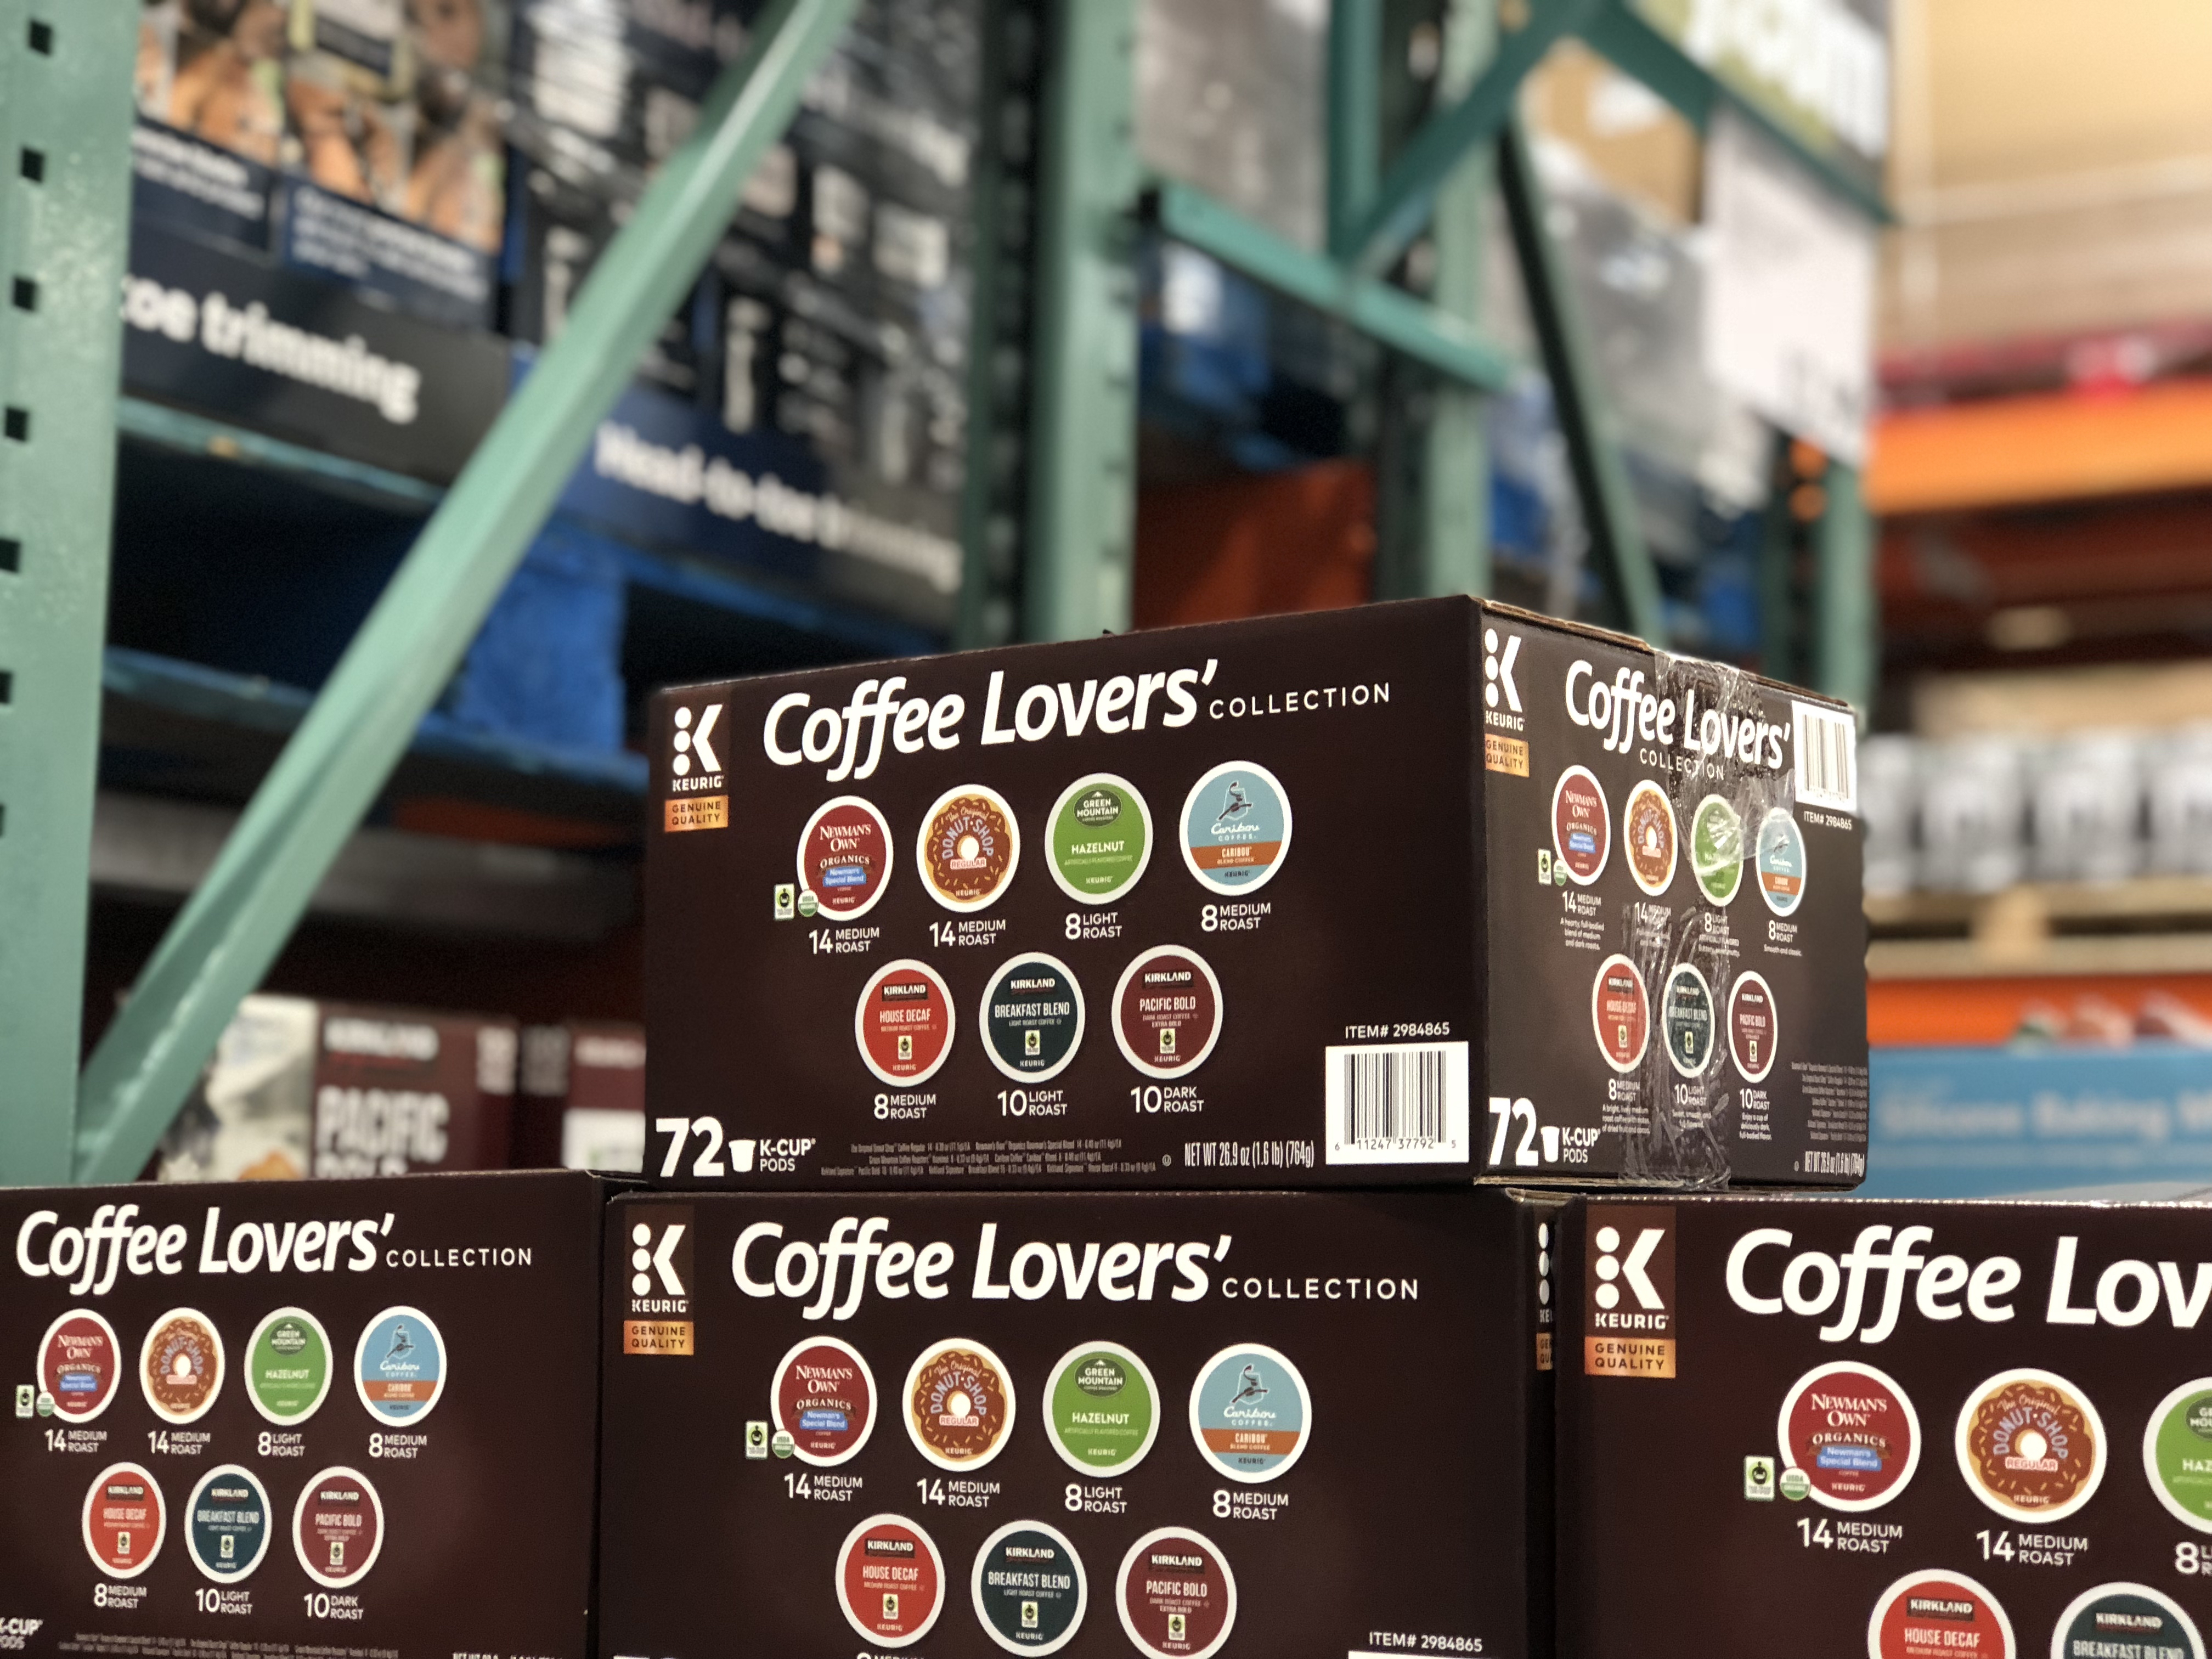 October 2018 keto Costco deals – Coffee Lovers' K-Cups at Costco